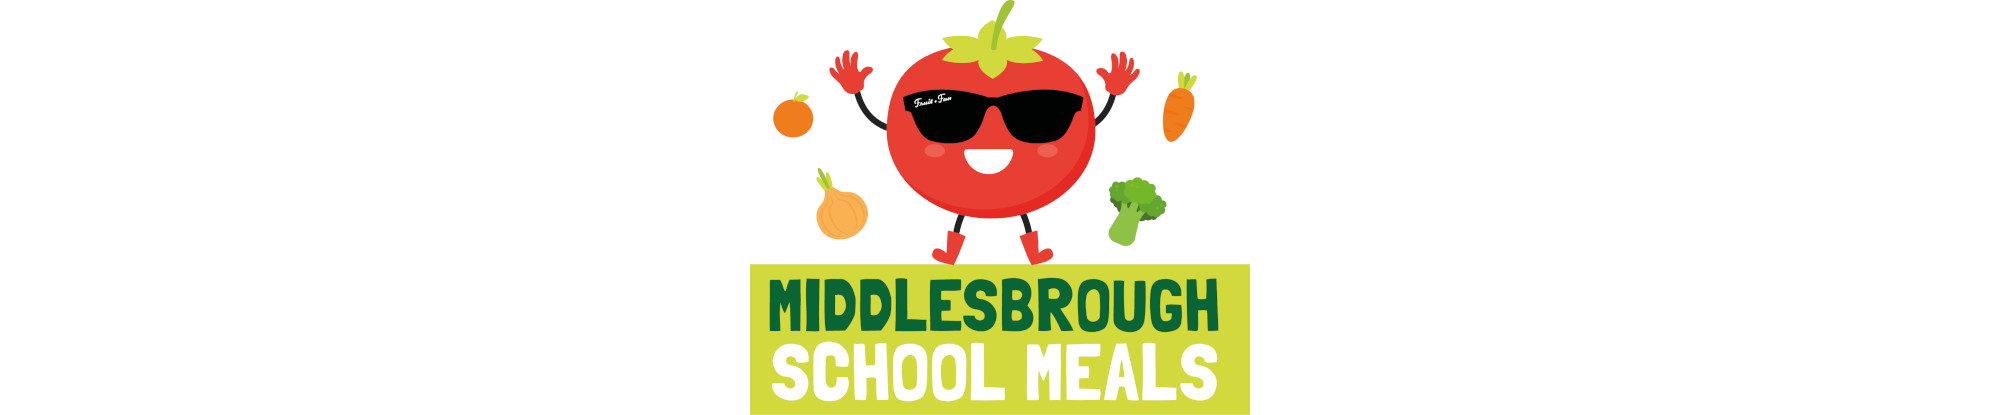 Middlesbrough school meals mascot